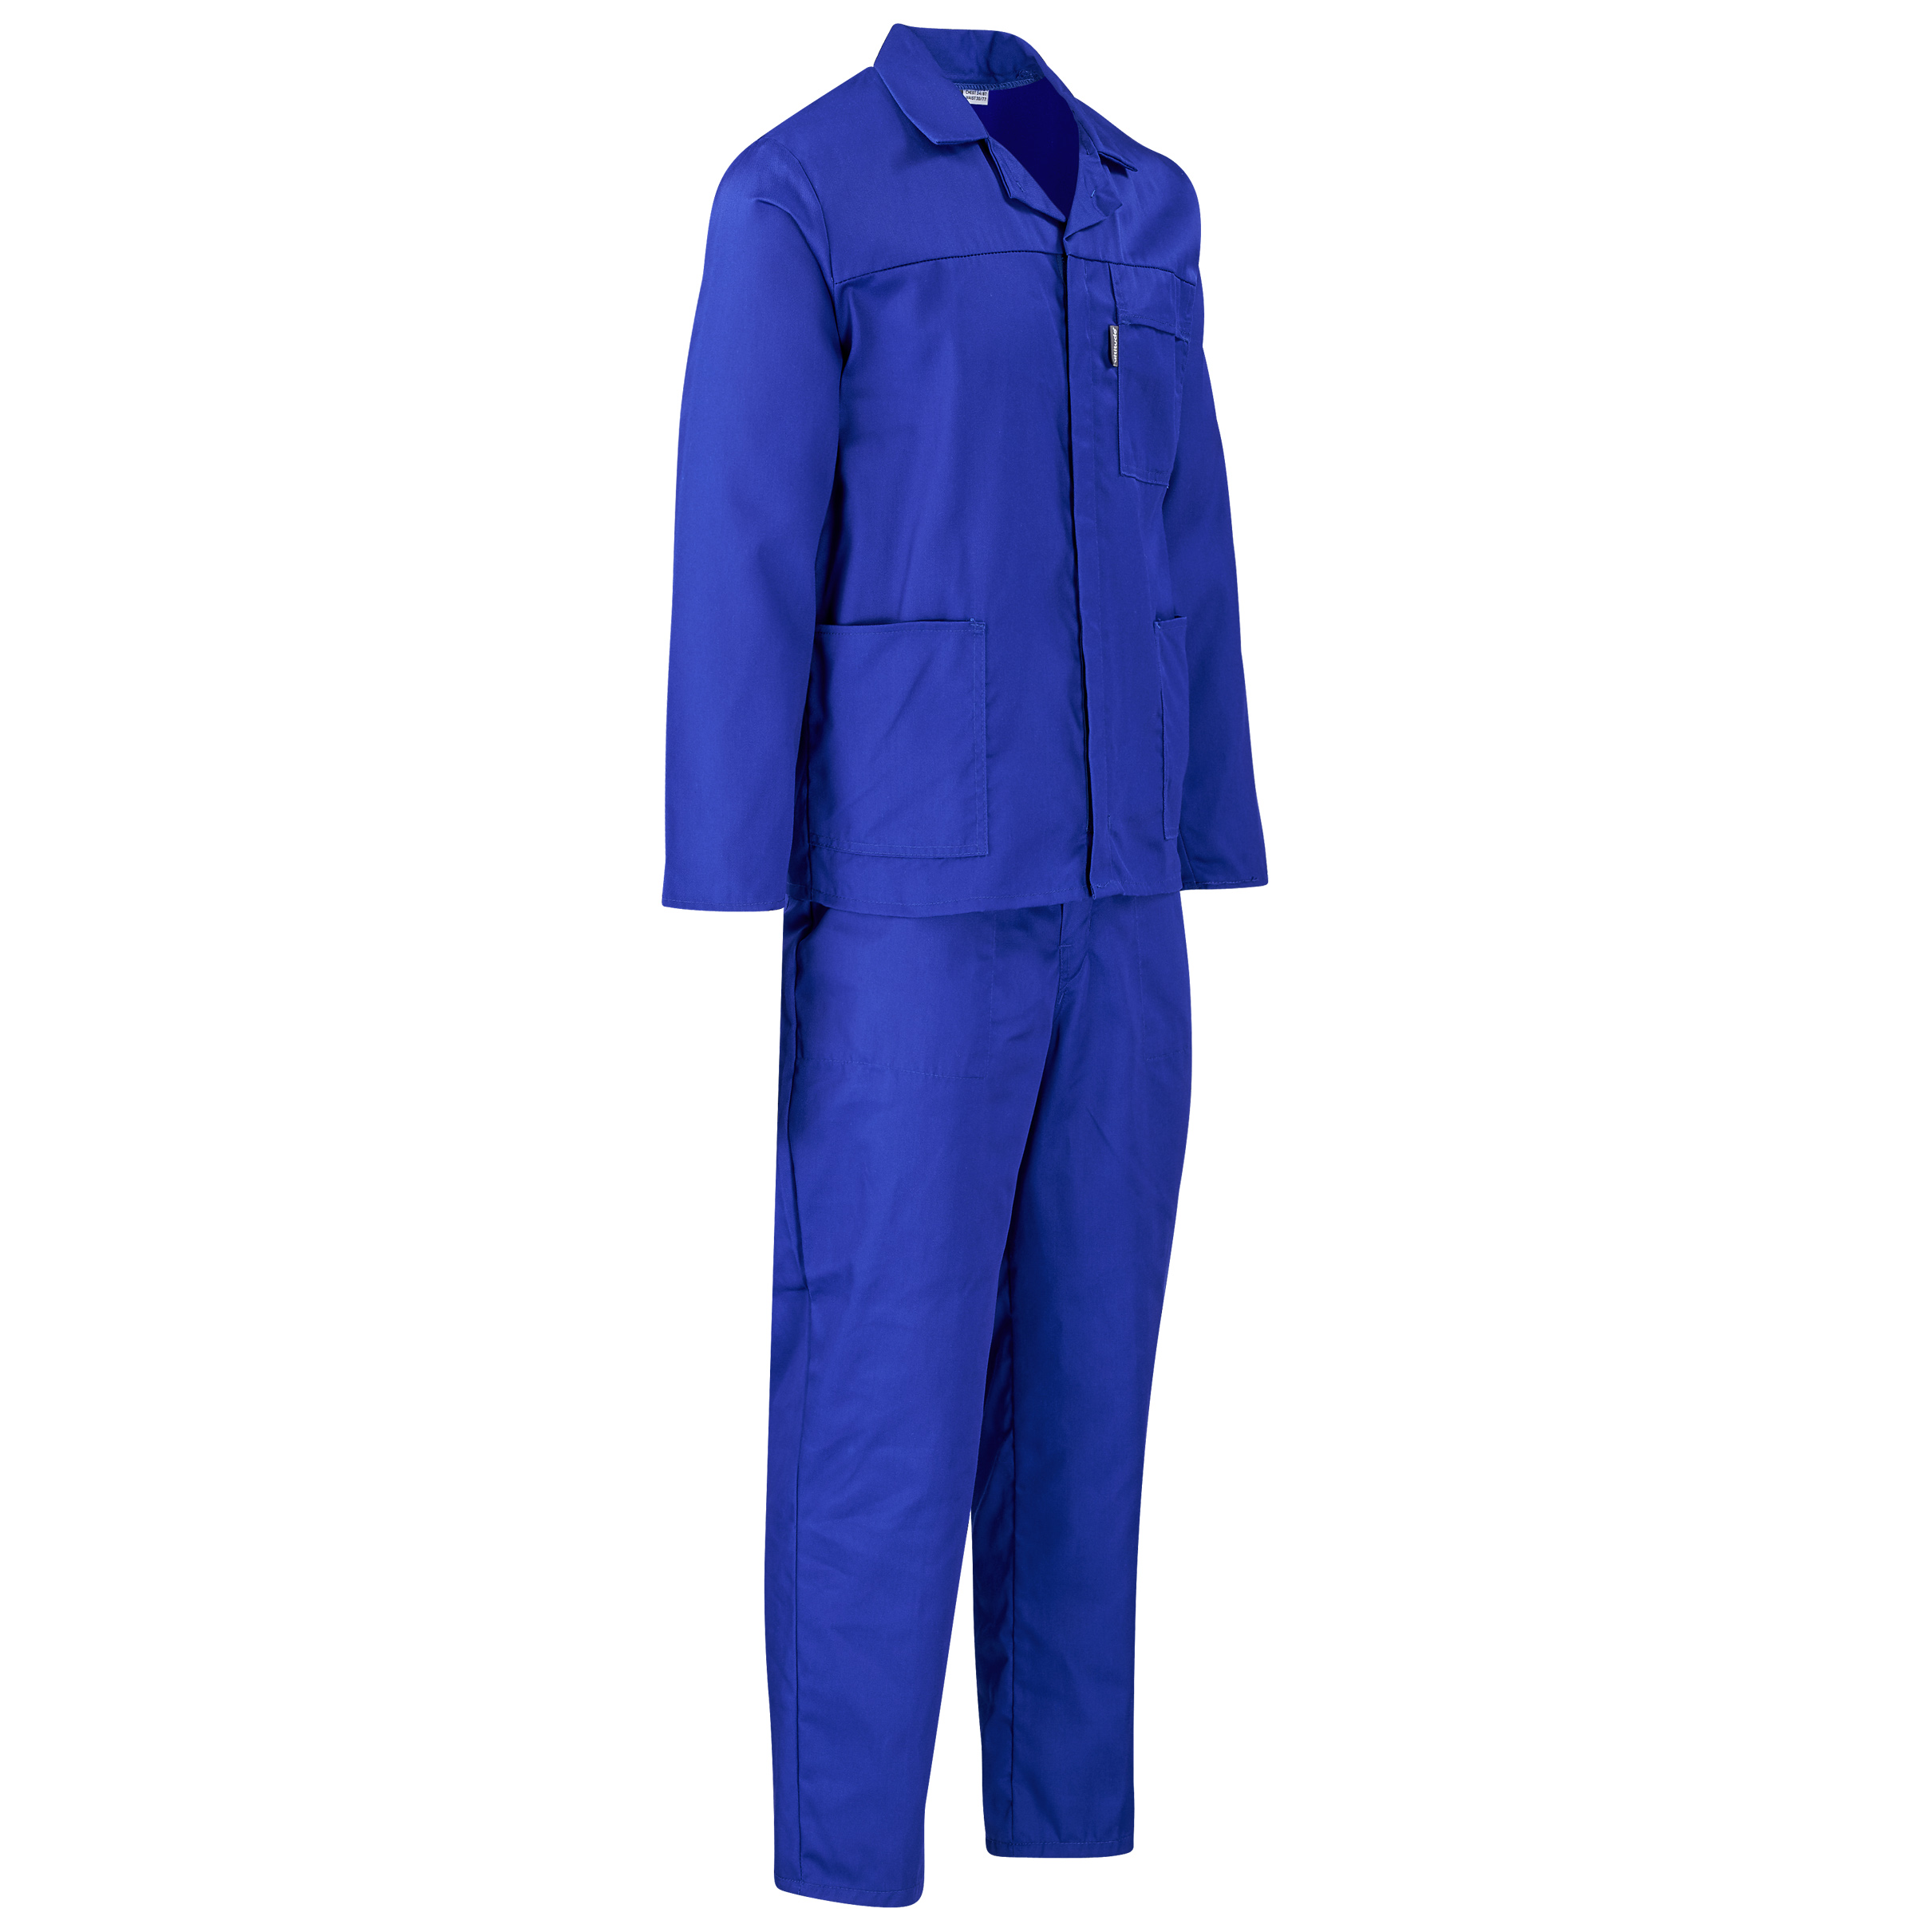 Trade Polycotton Conti Suit royal blue ALT-1101-RB_default by brandxellence workwear